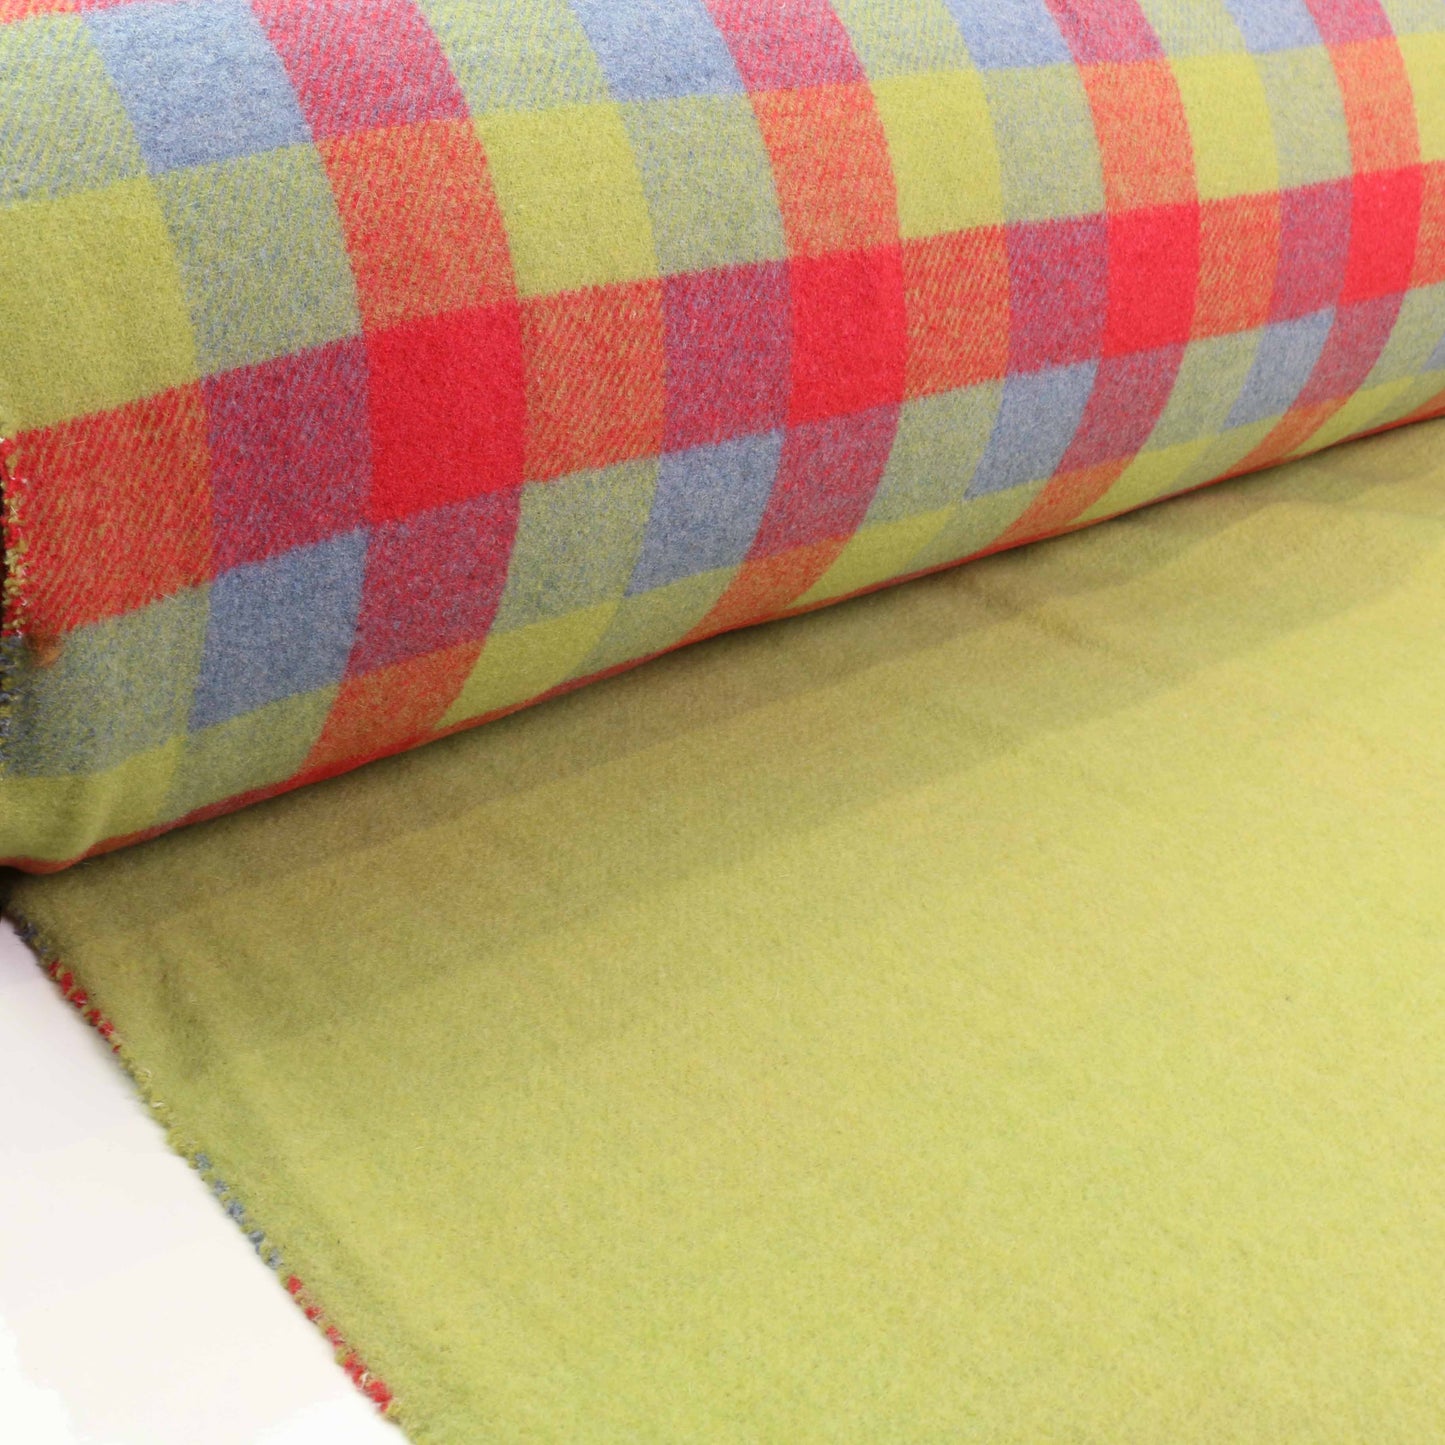 Reversible Wool Coating - Green, red, blue